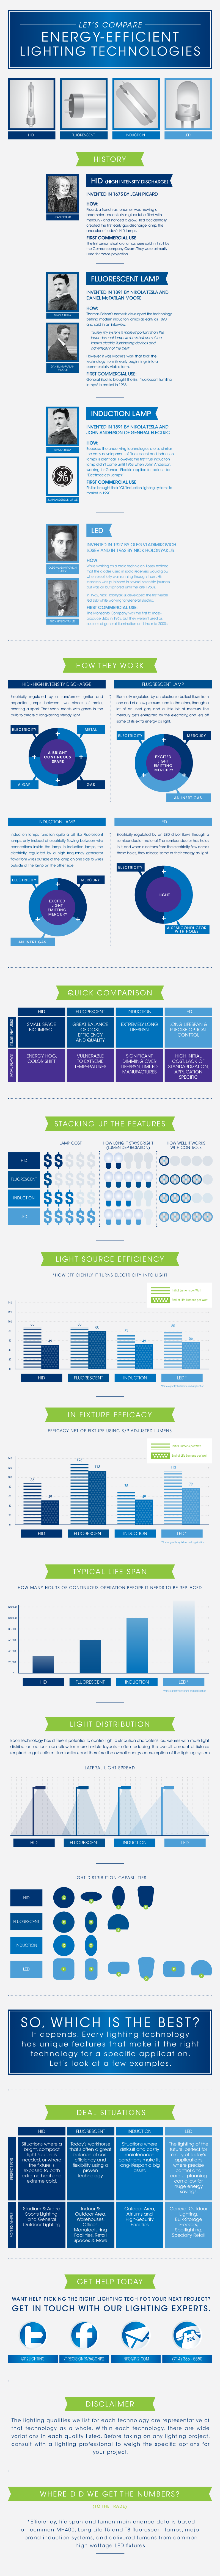 Energy-Efficient-Lighting-Technologies-infographic